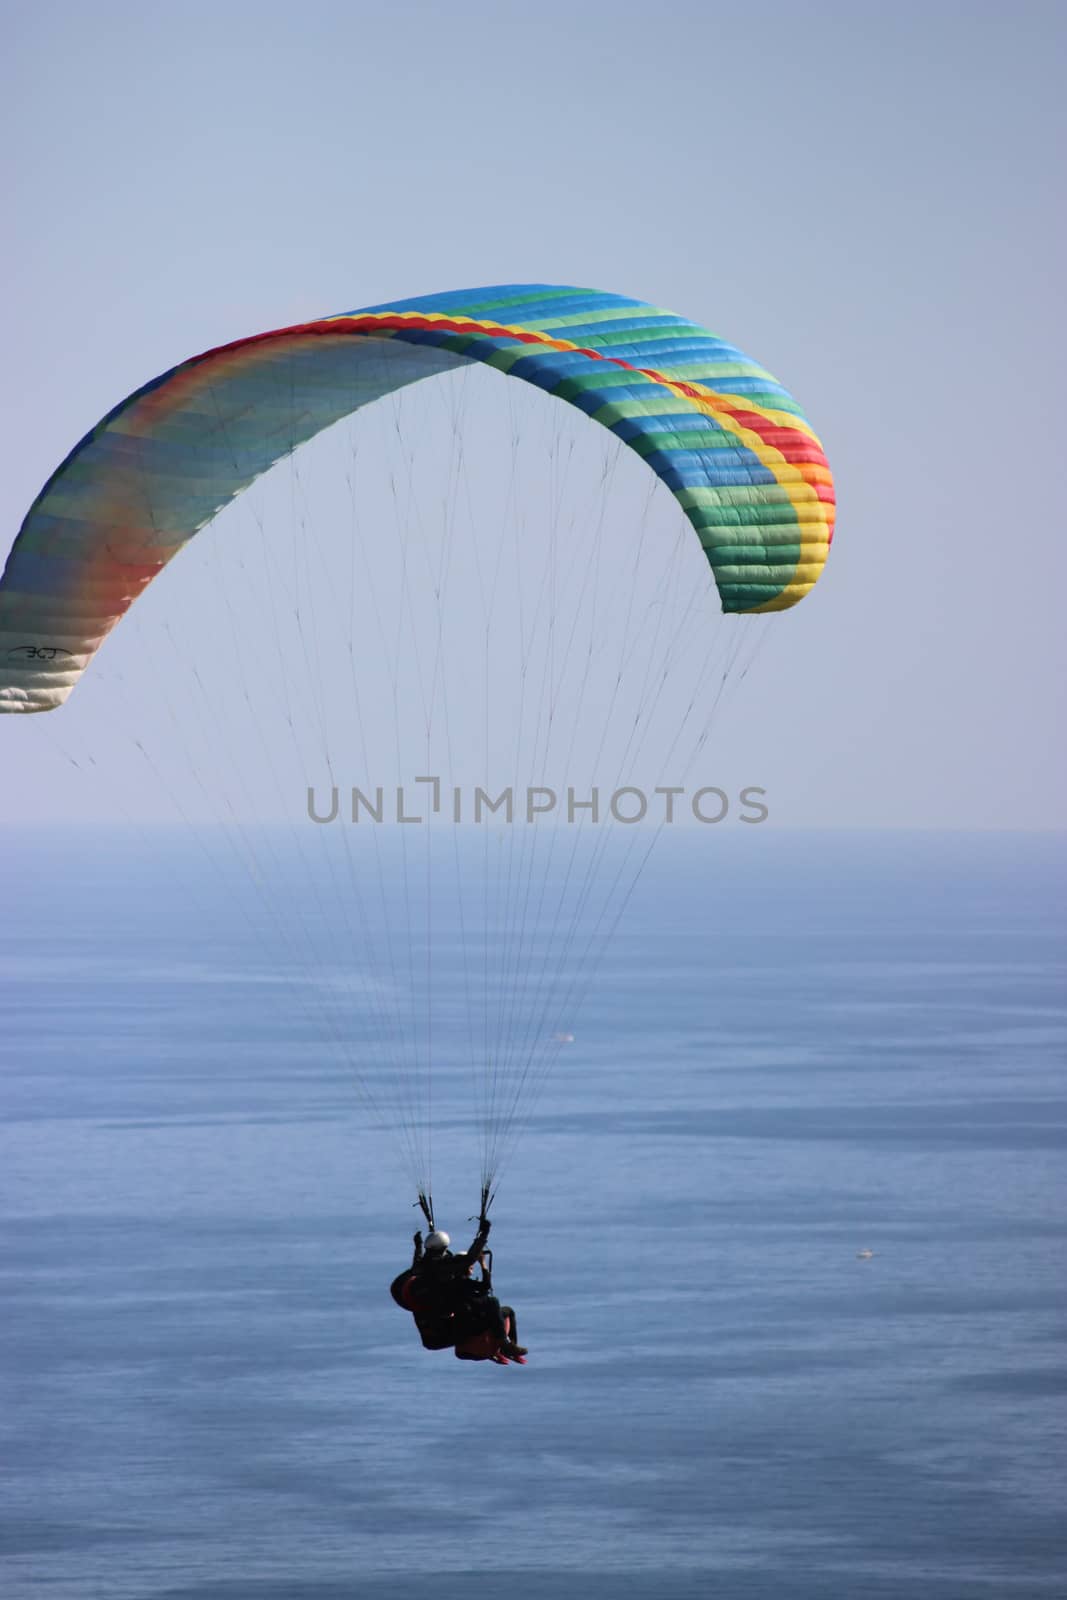 Tandem Paragliding over the Mediterrean Sea by bensib